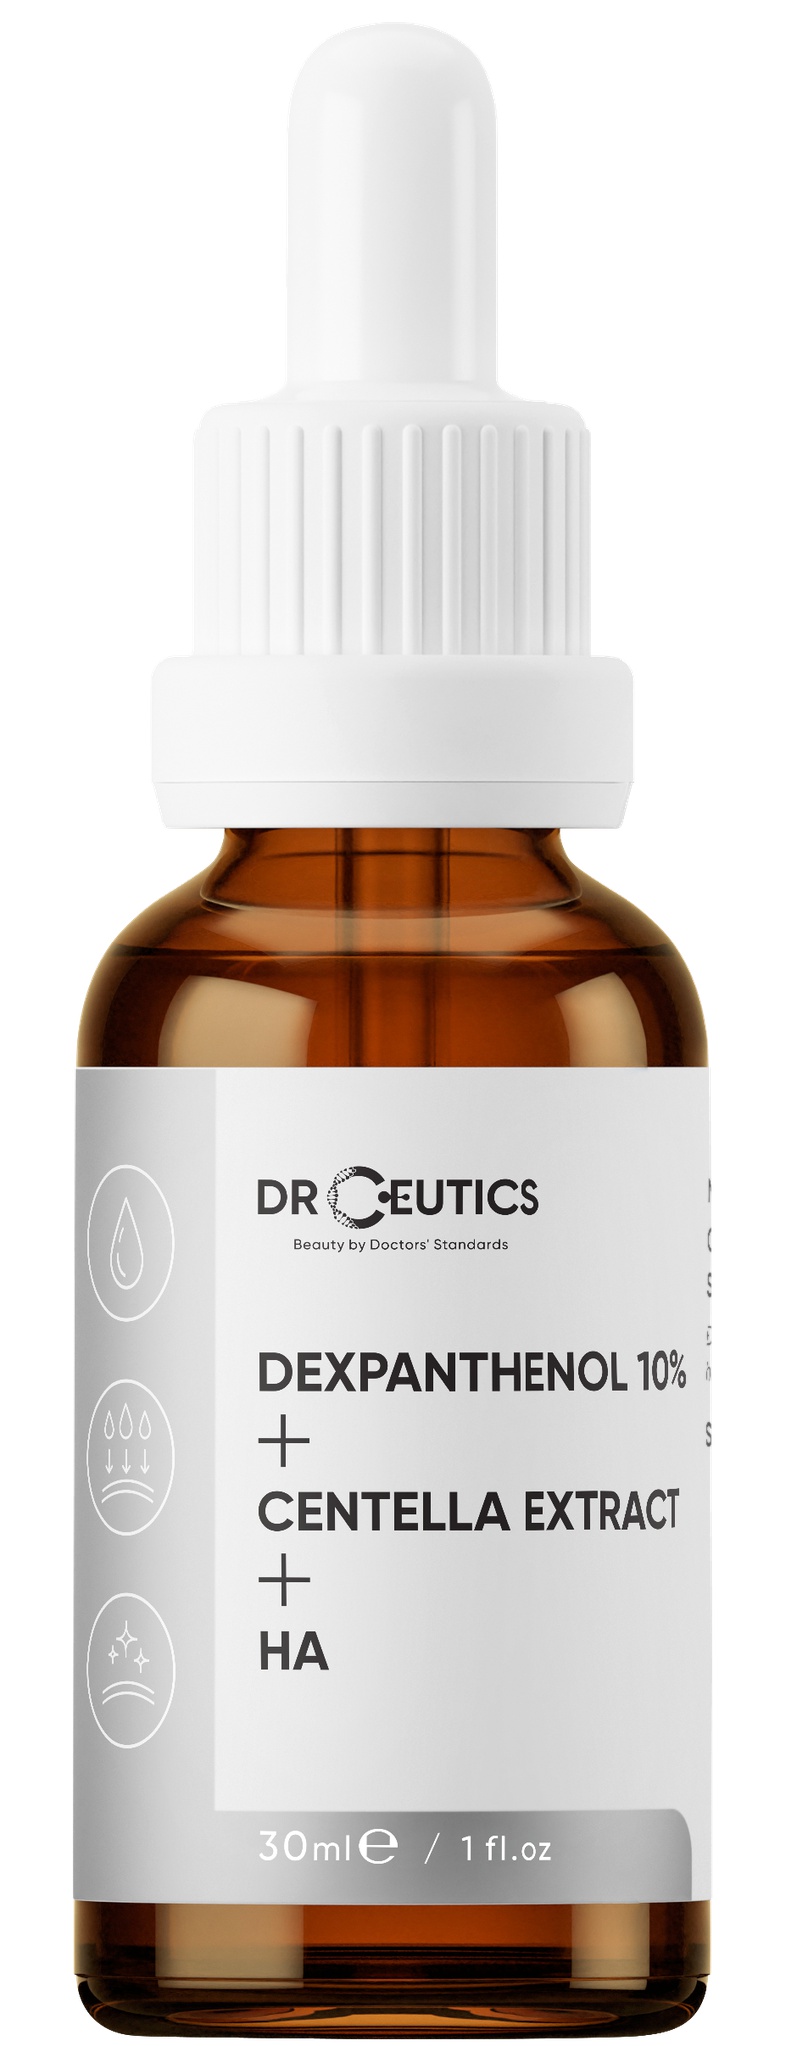 DrCeutics Dexpanthenol 10% + Centella Extract + Ha